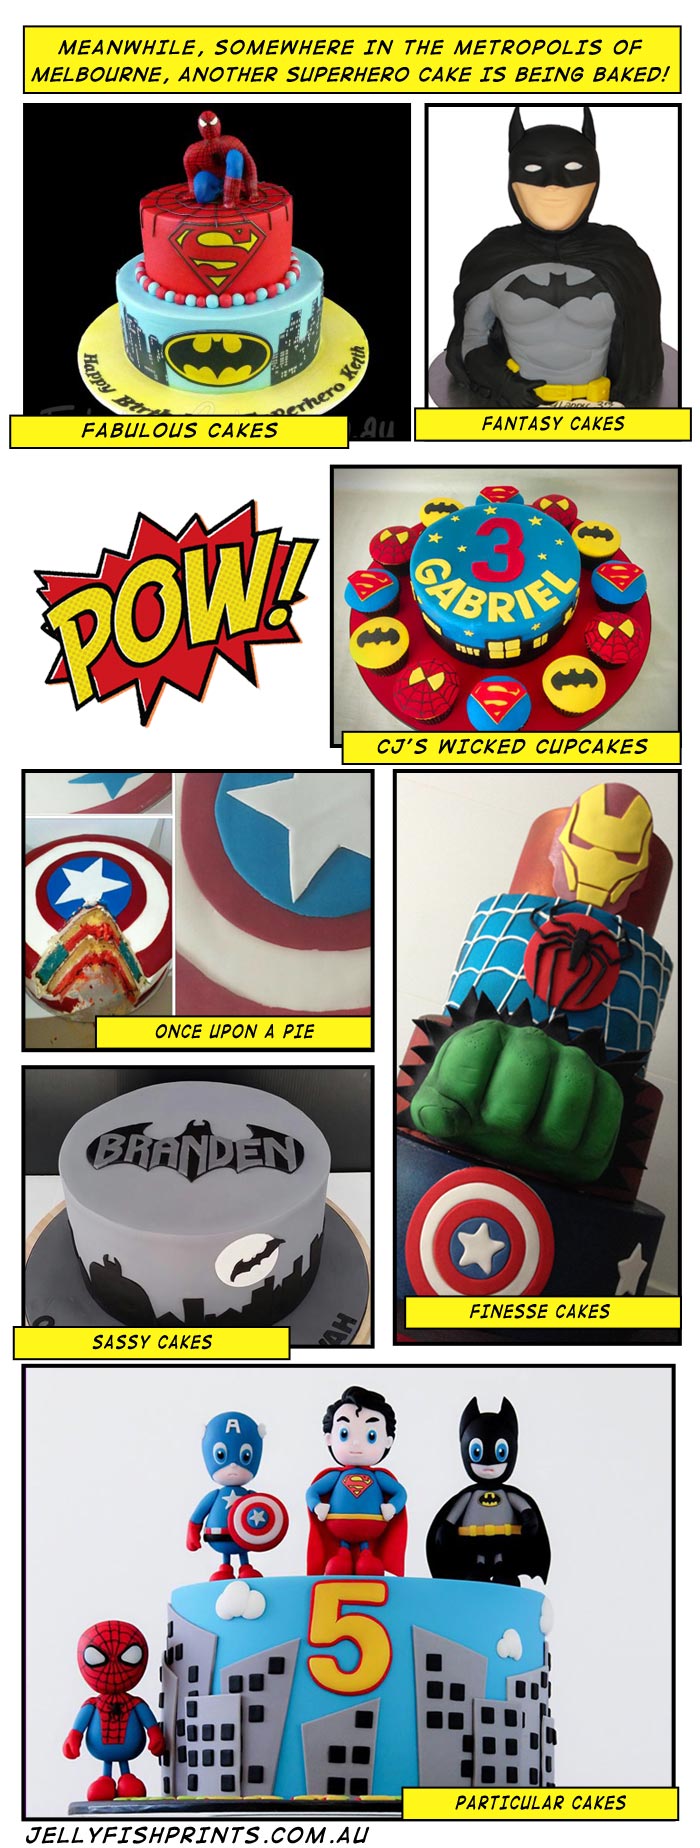 Cool Superheroes birthday cakes in Melbourn Australia.